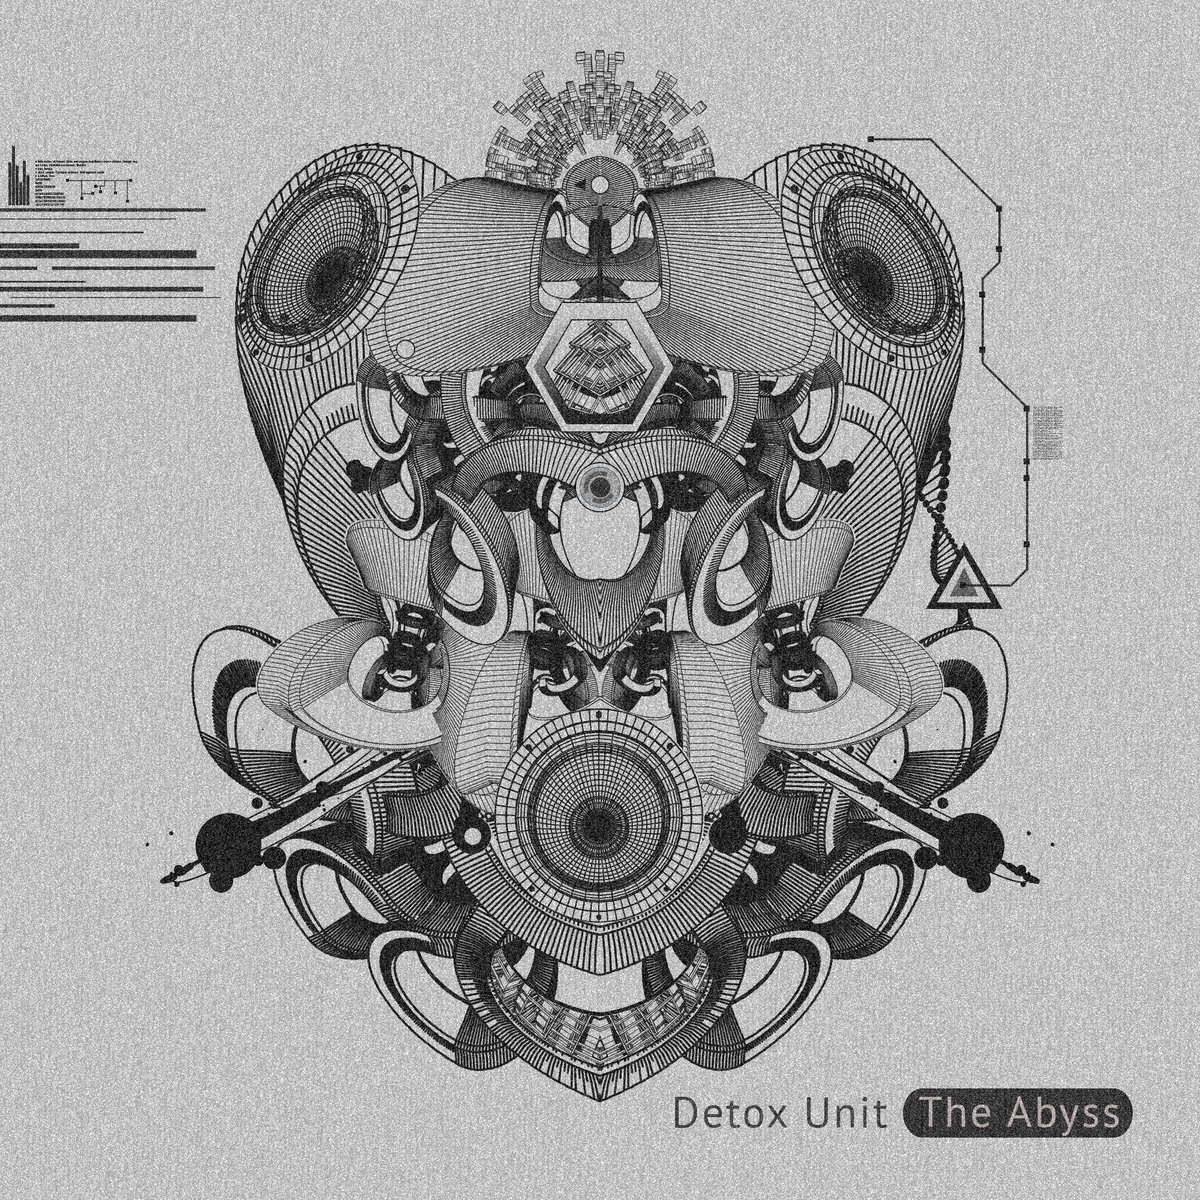 Detox Unit - The Abyss